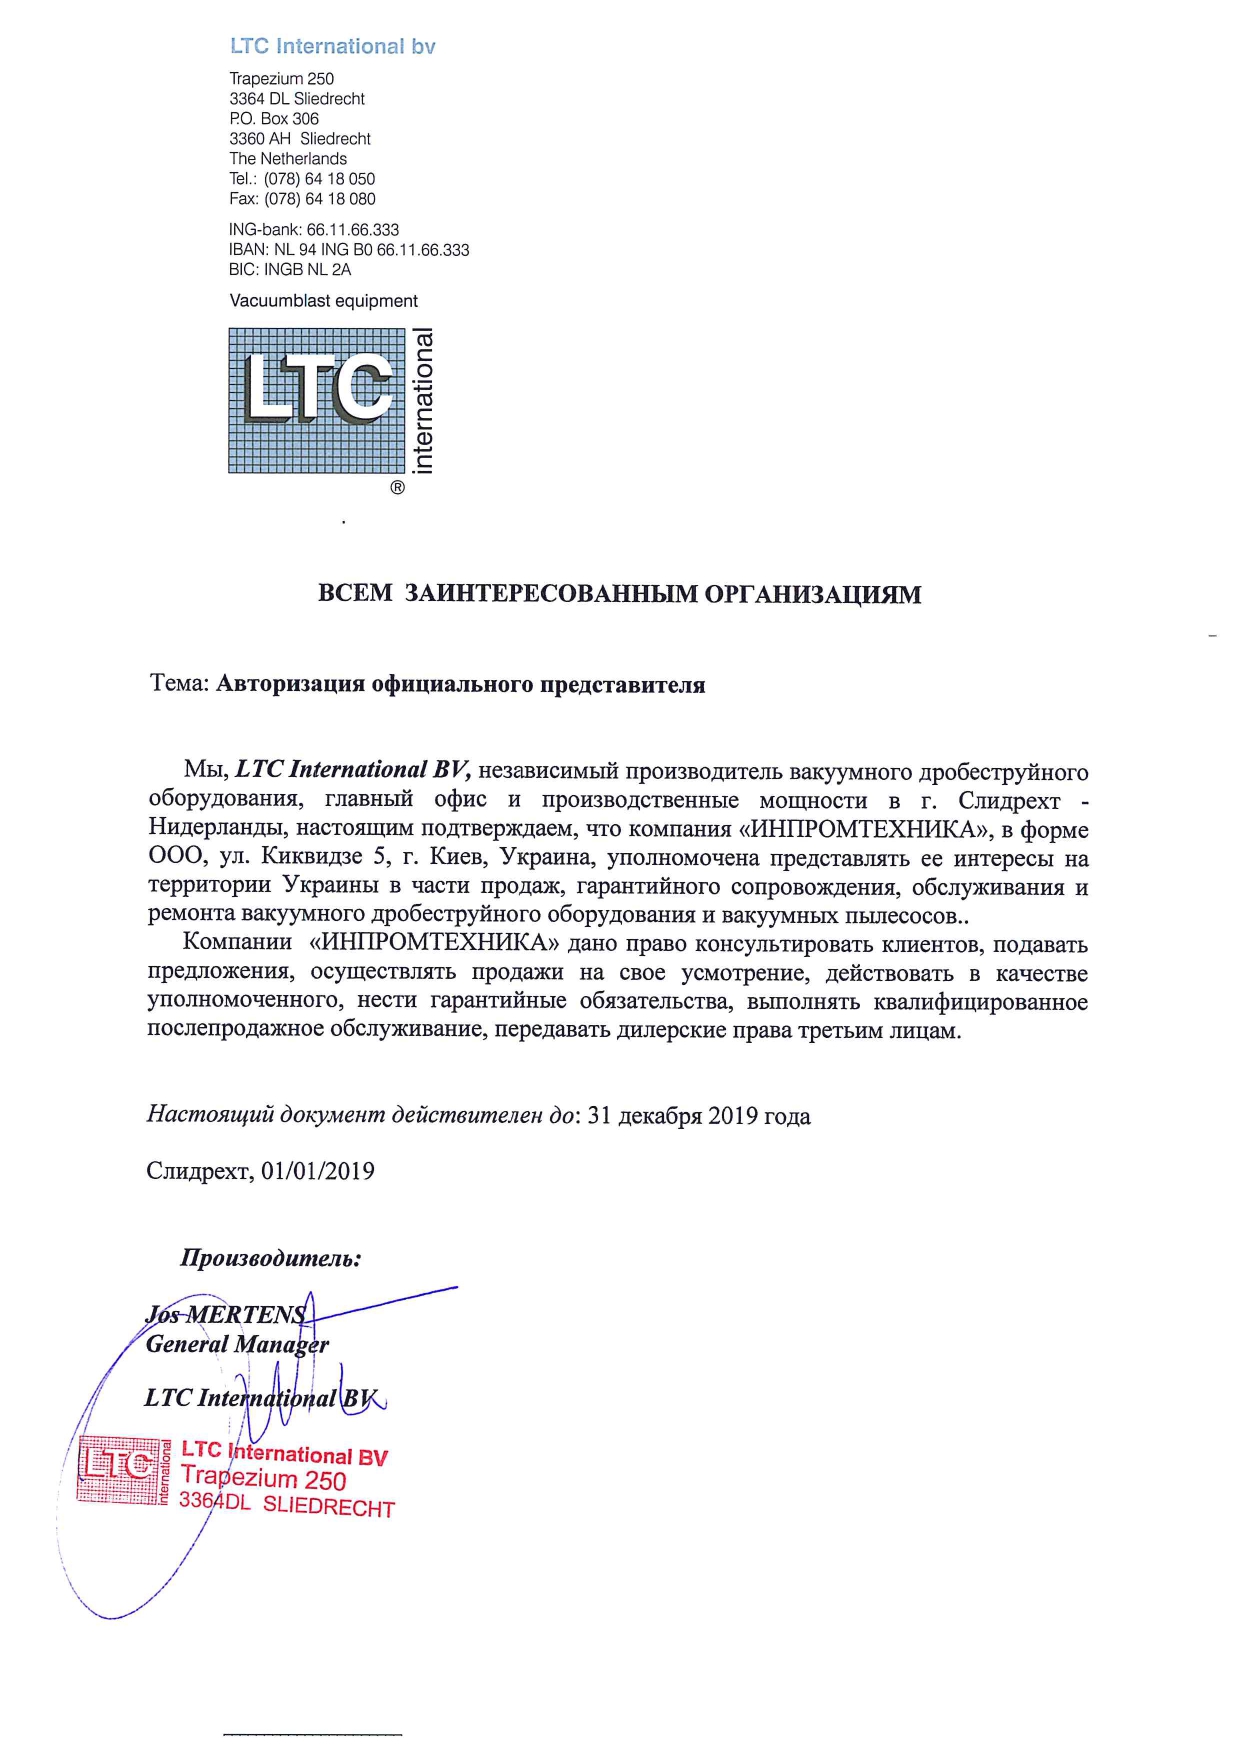 LTC International Ukraine